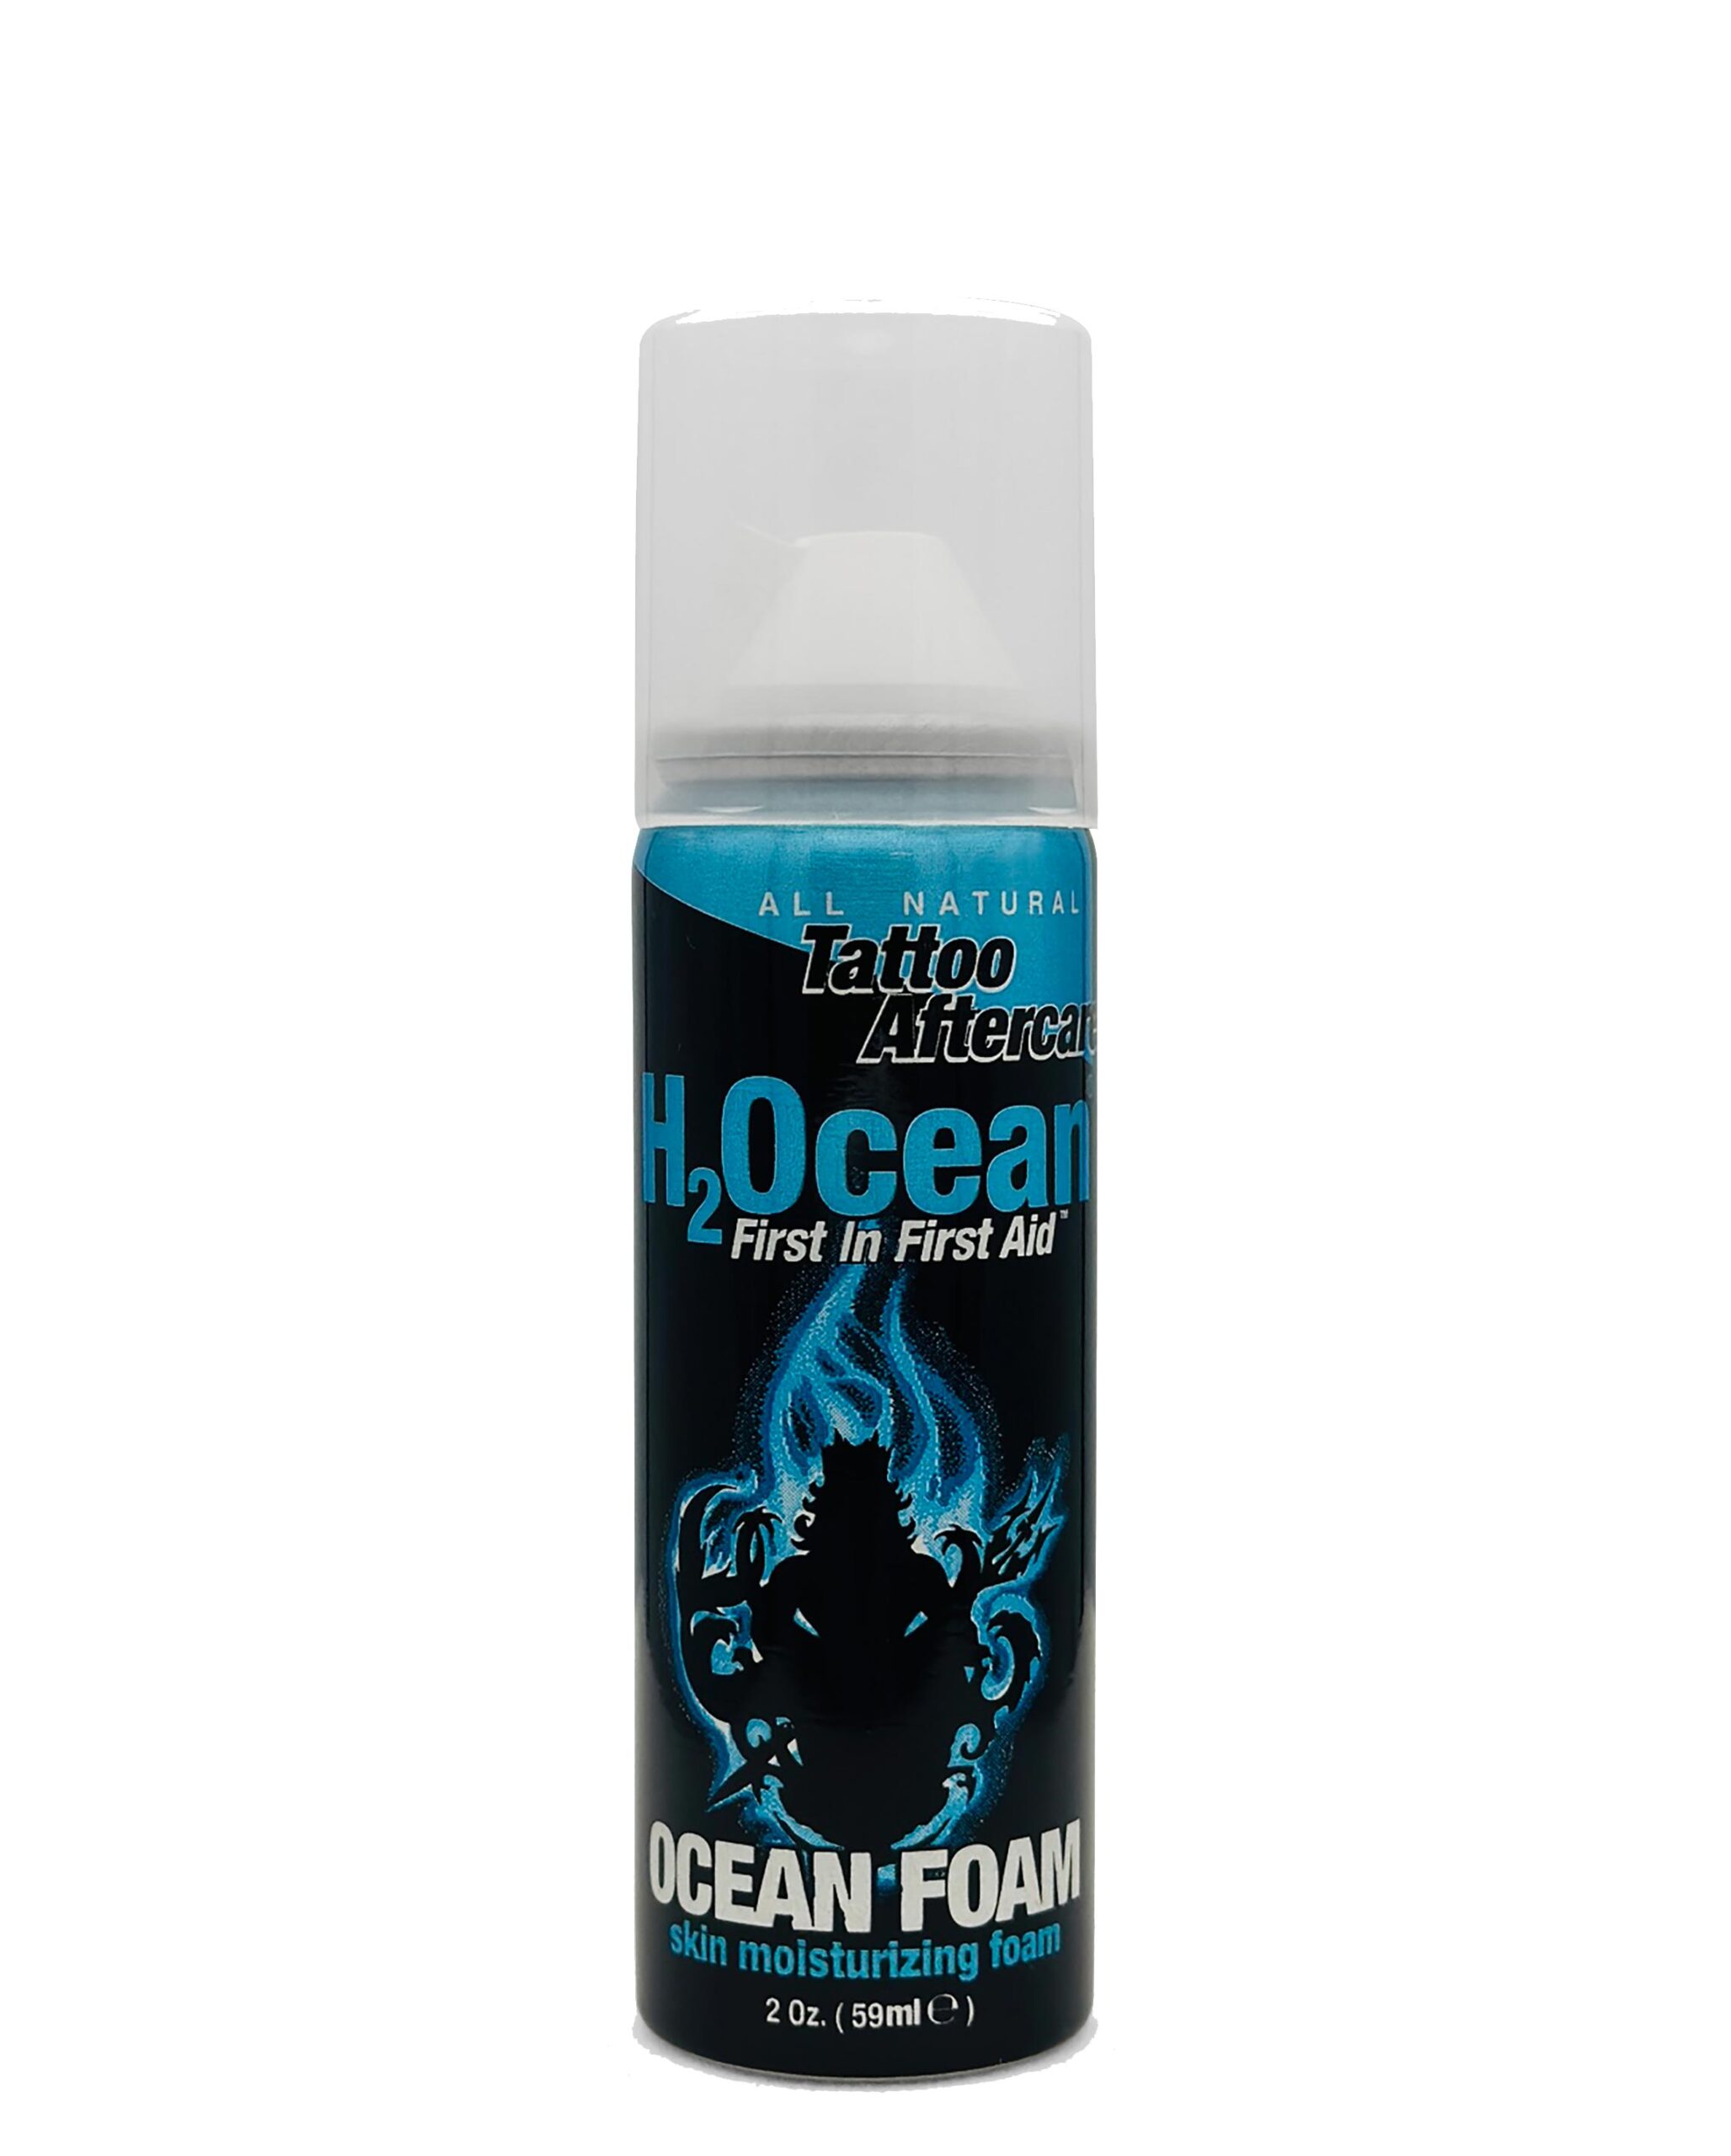 Ocean Foam Tattoo Aftercare